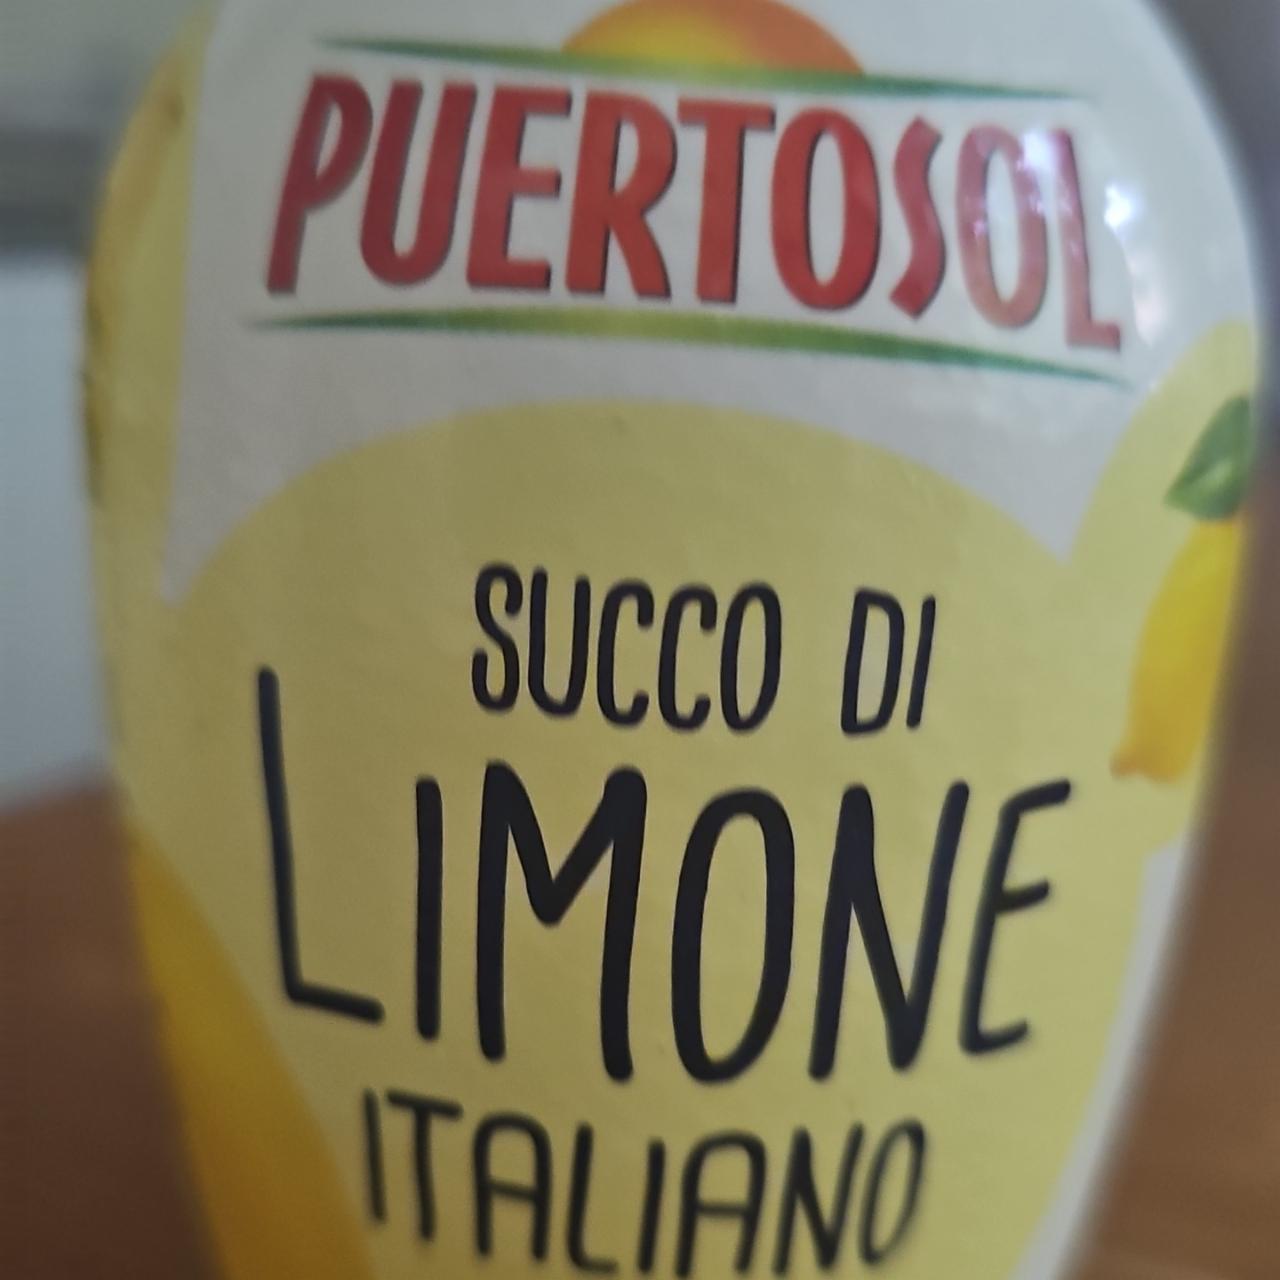 Fotografie - Succo di limone italiano Puertosol